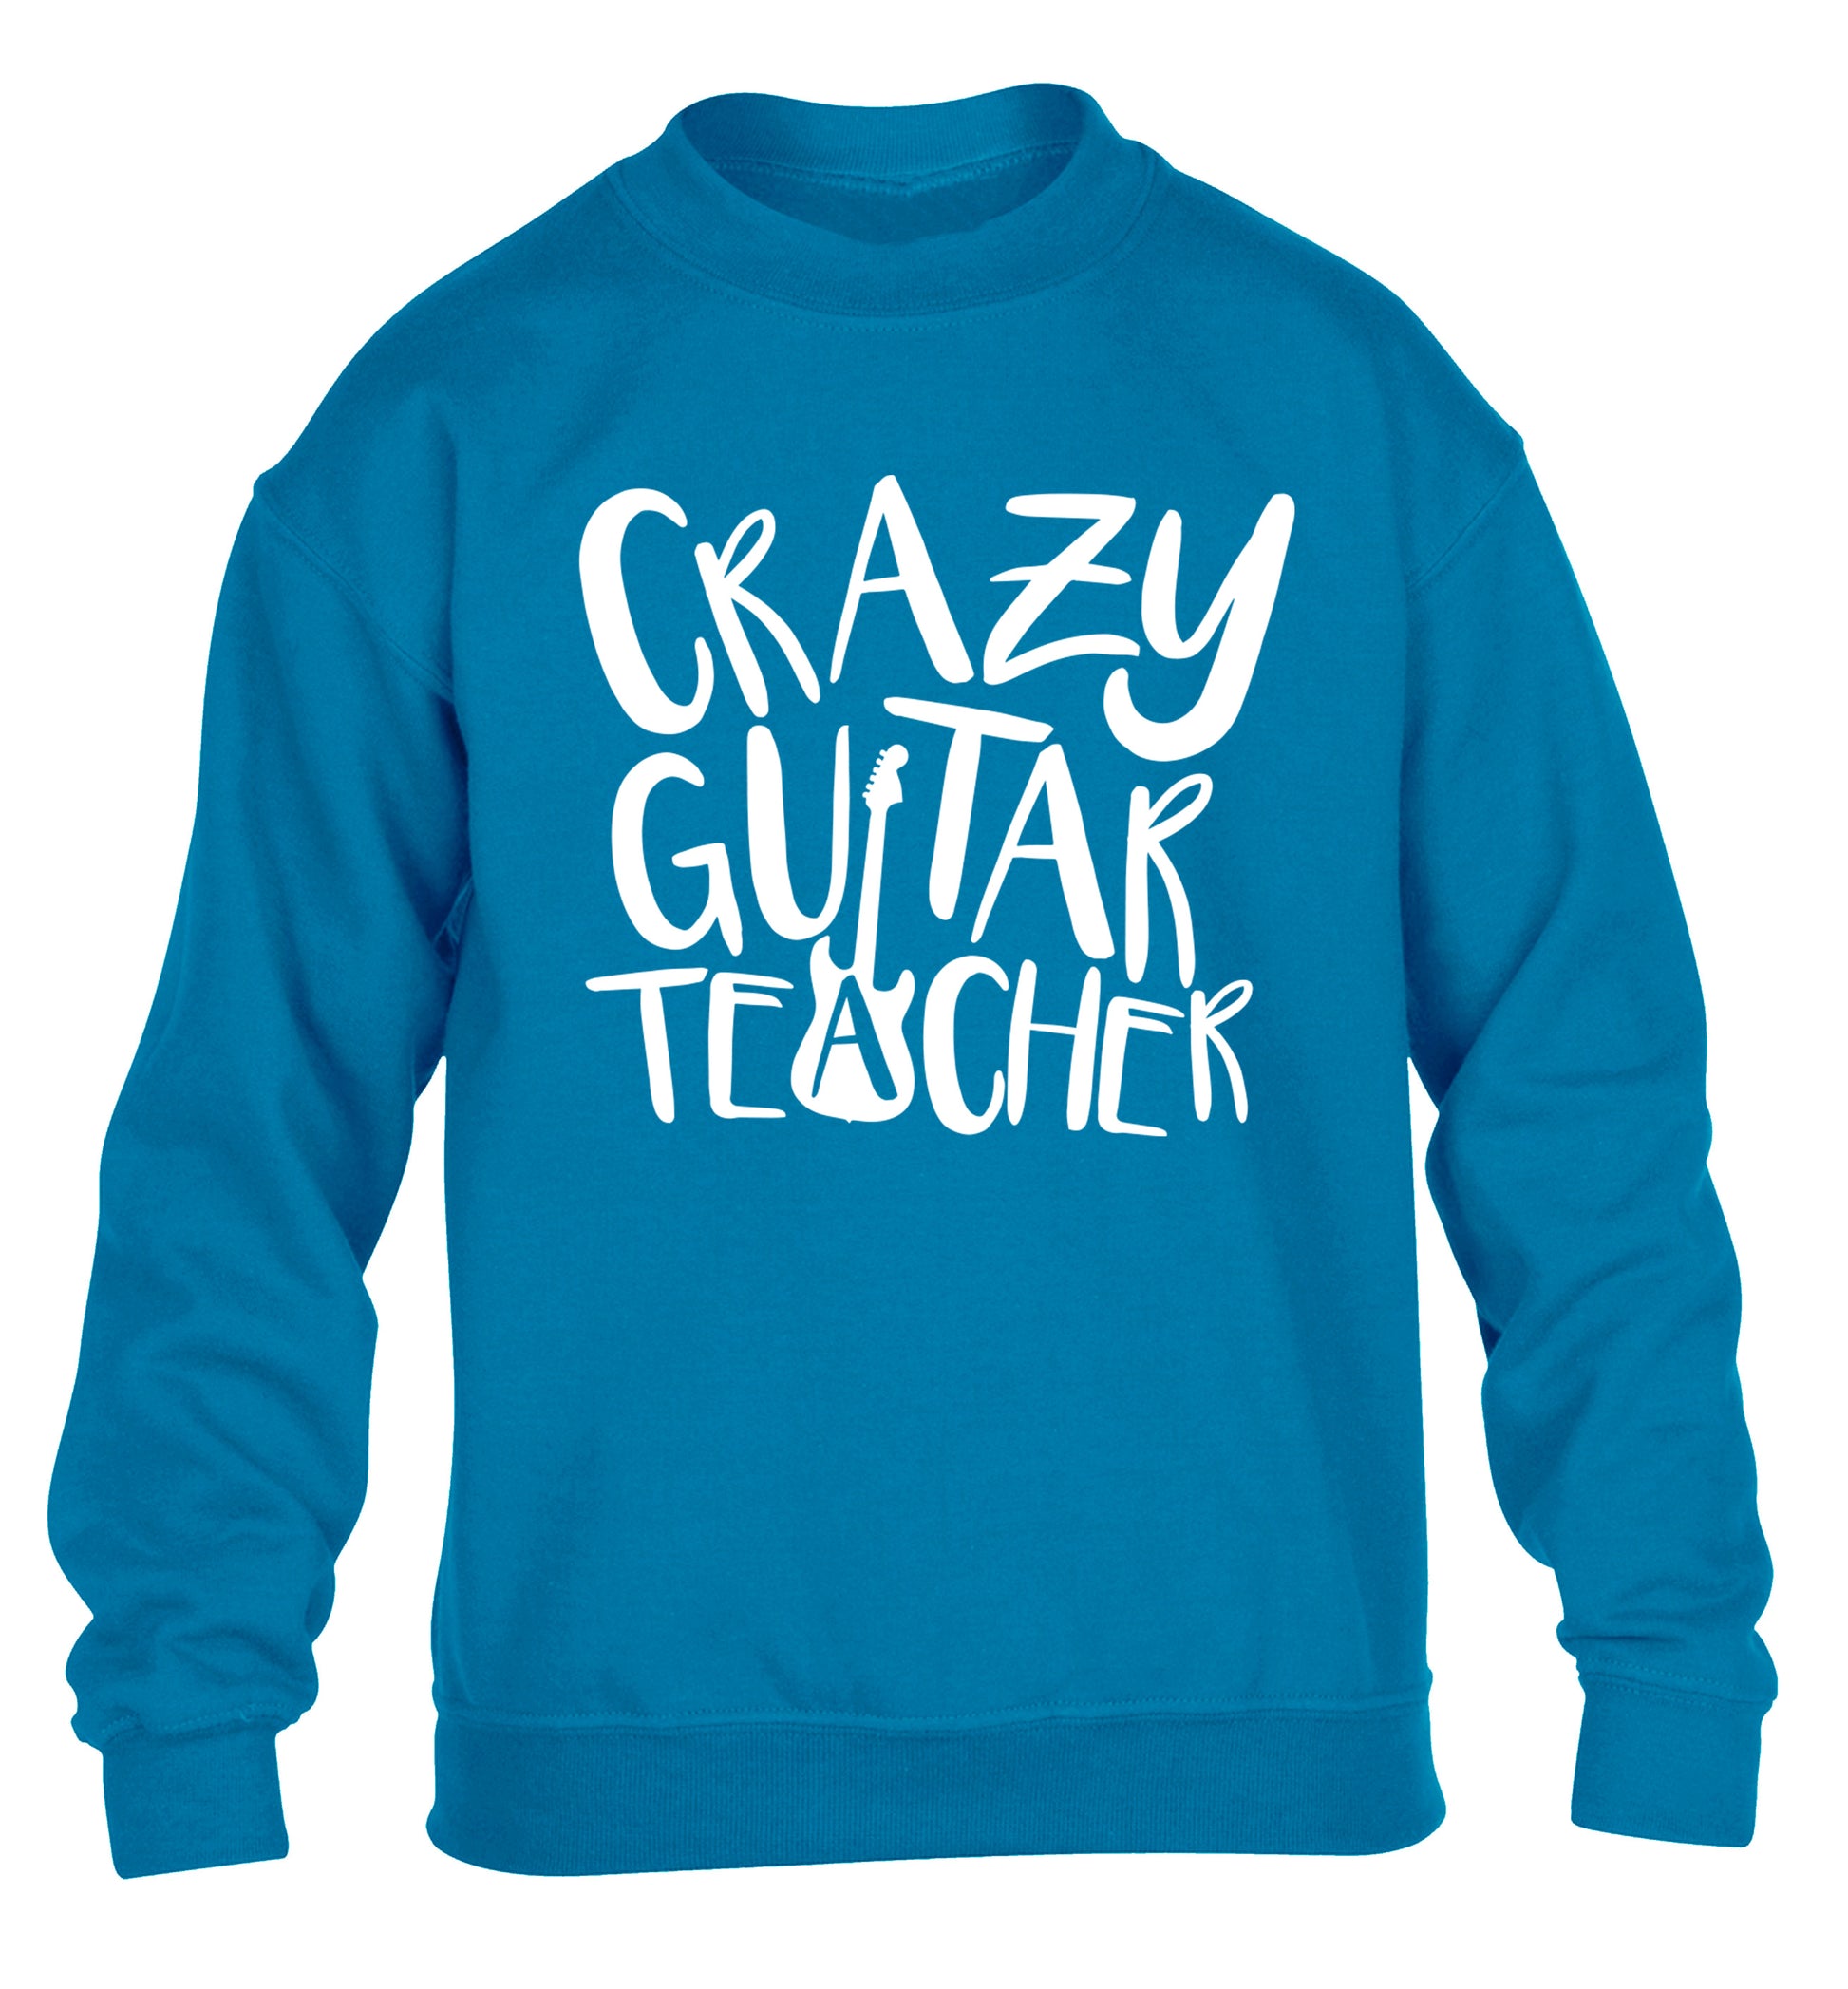 Crazy guitar teacher children's blue sweater 12-13 Years